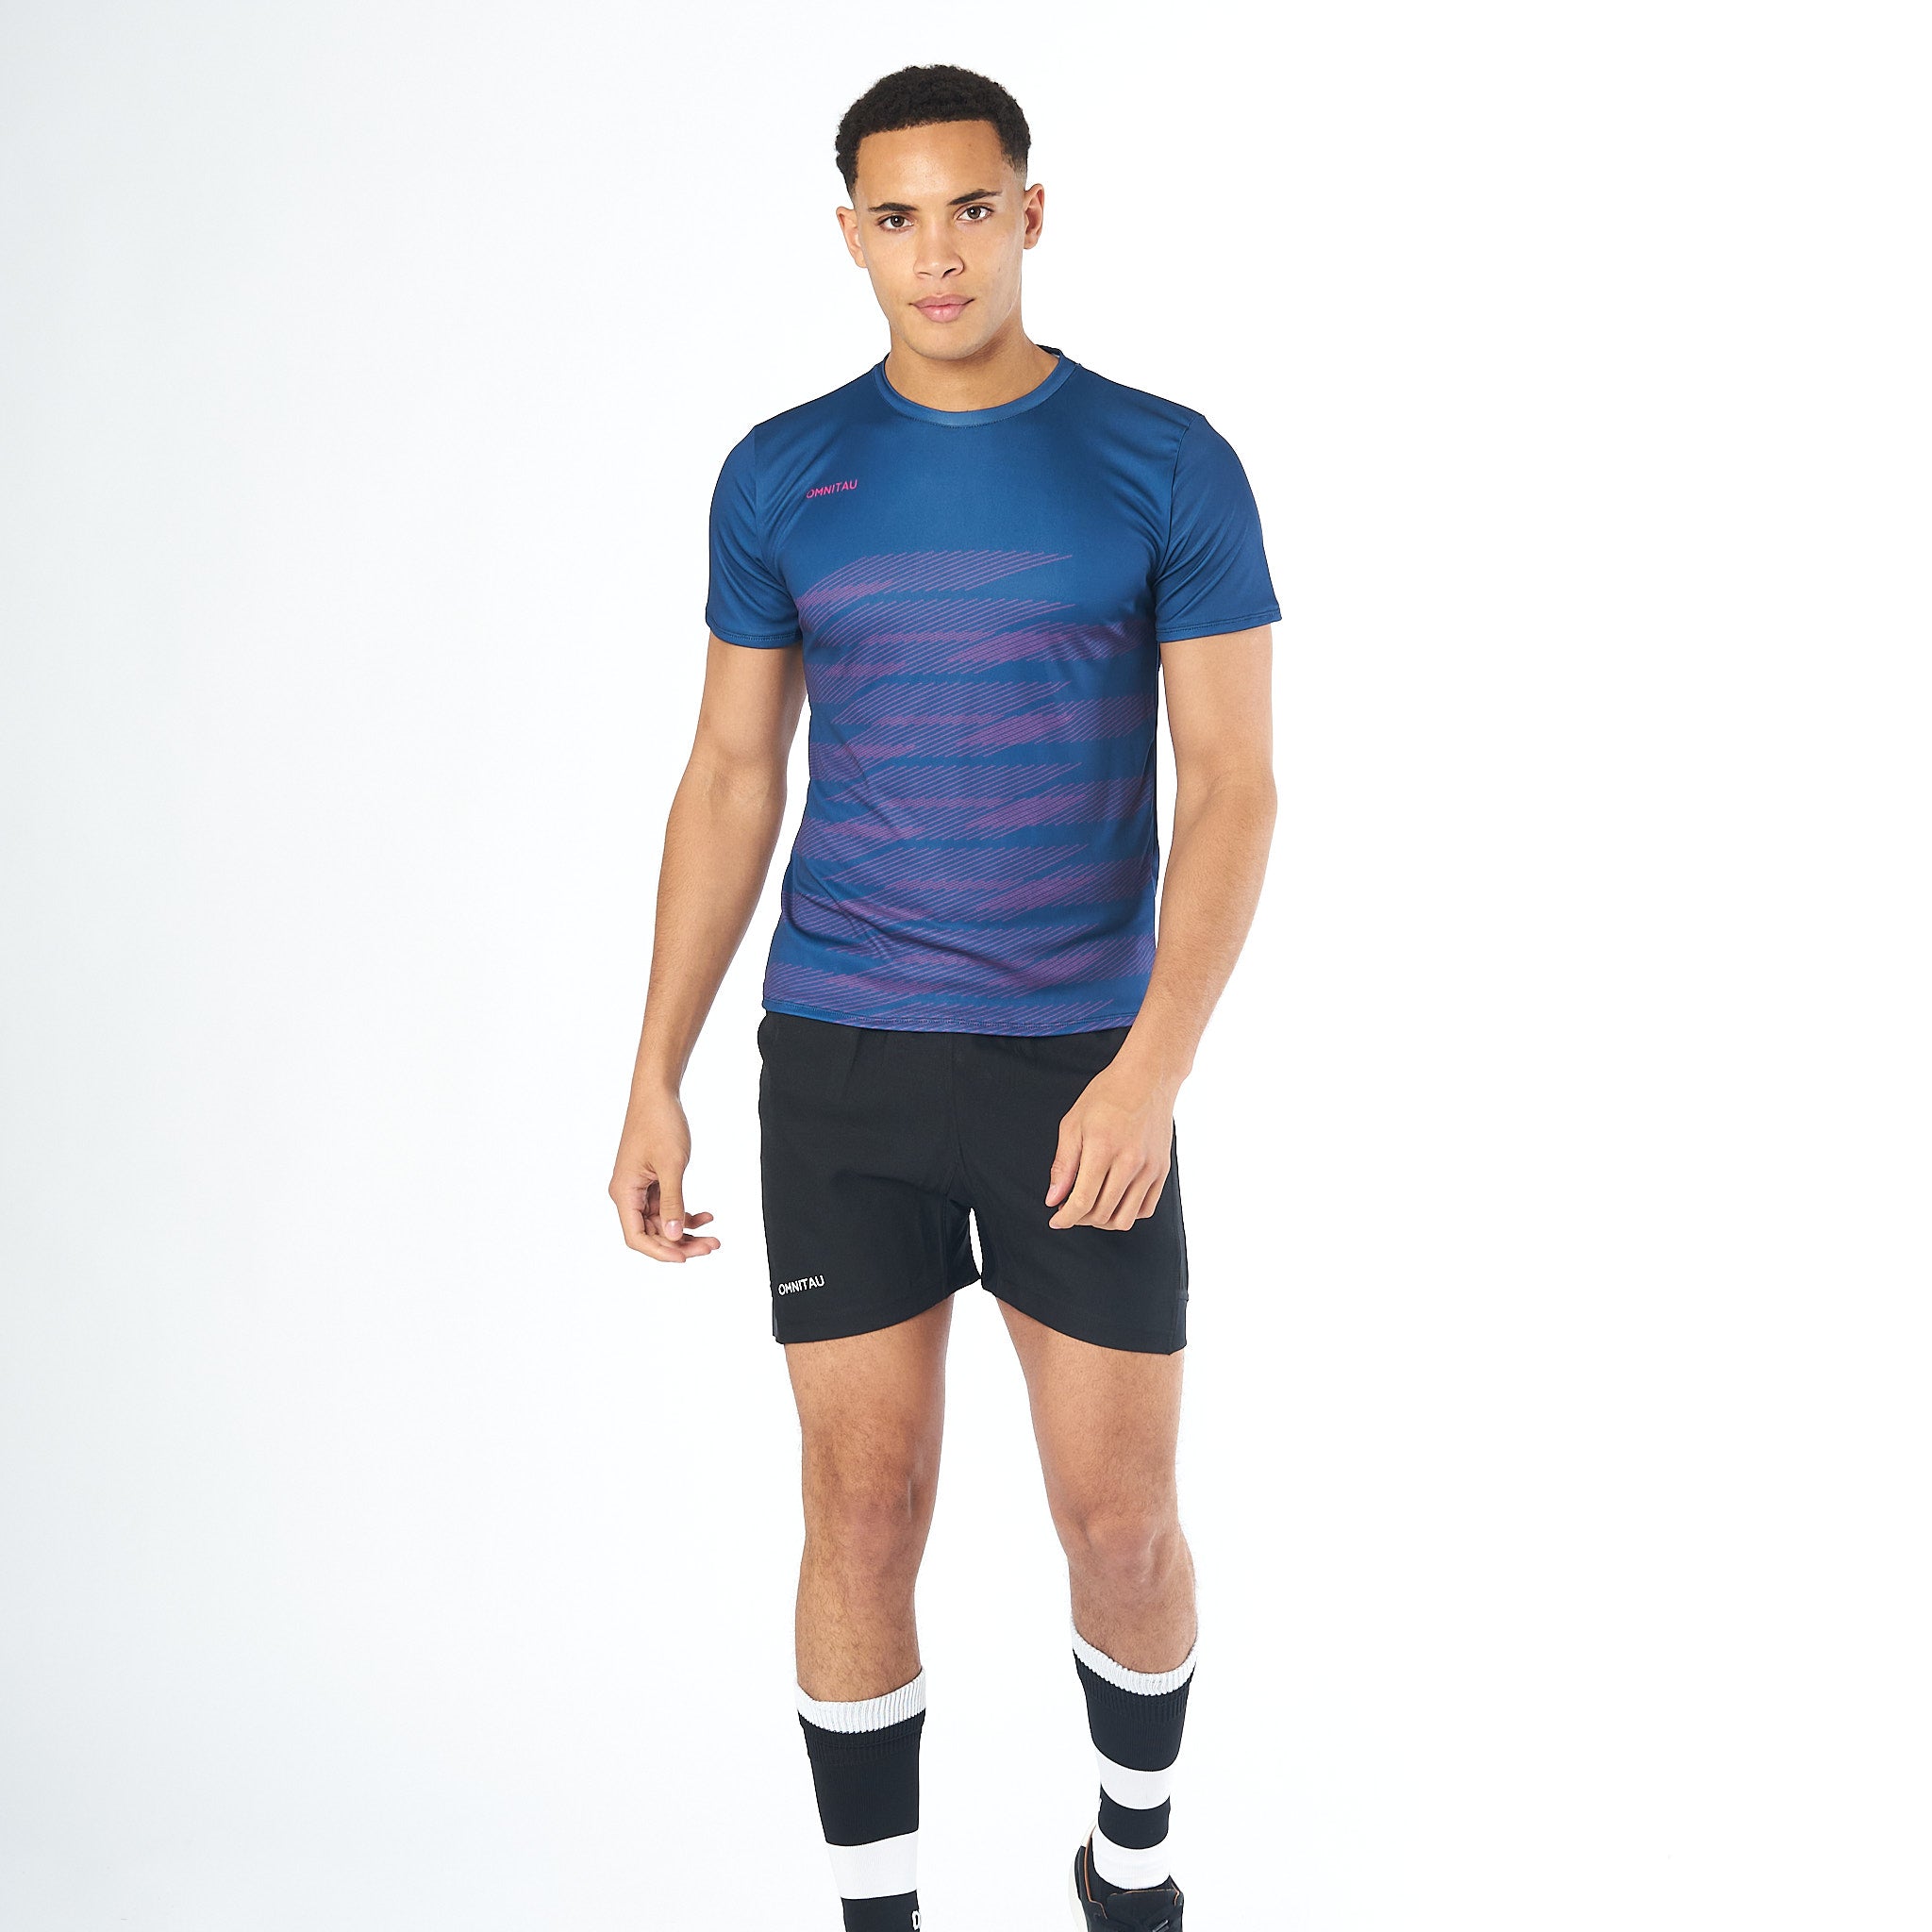 Omnitau Men's Team Sports Breathable Rugby Shorts - Black